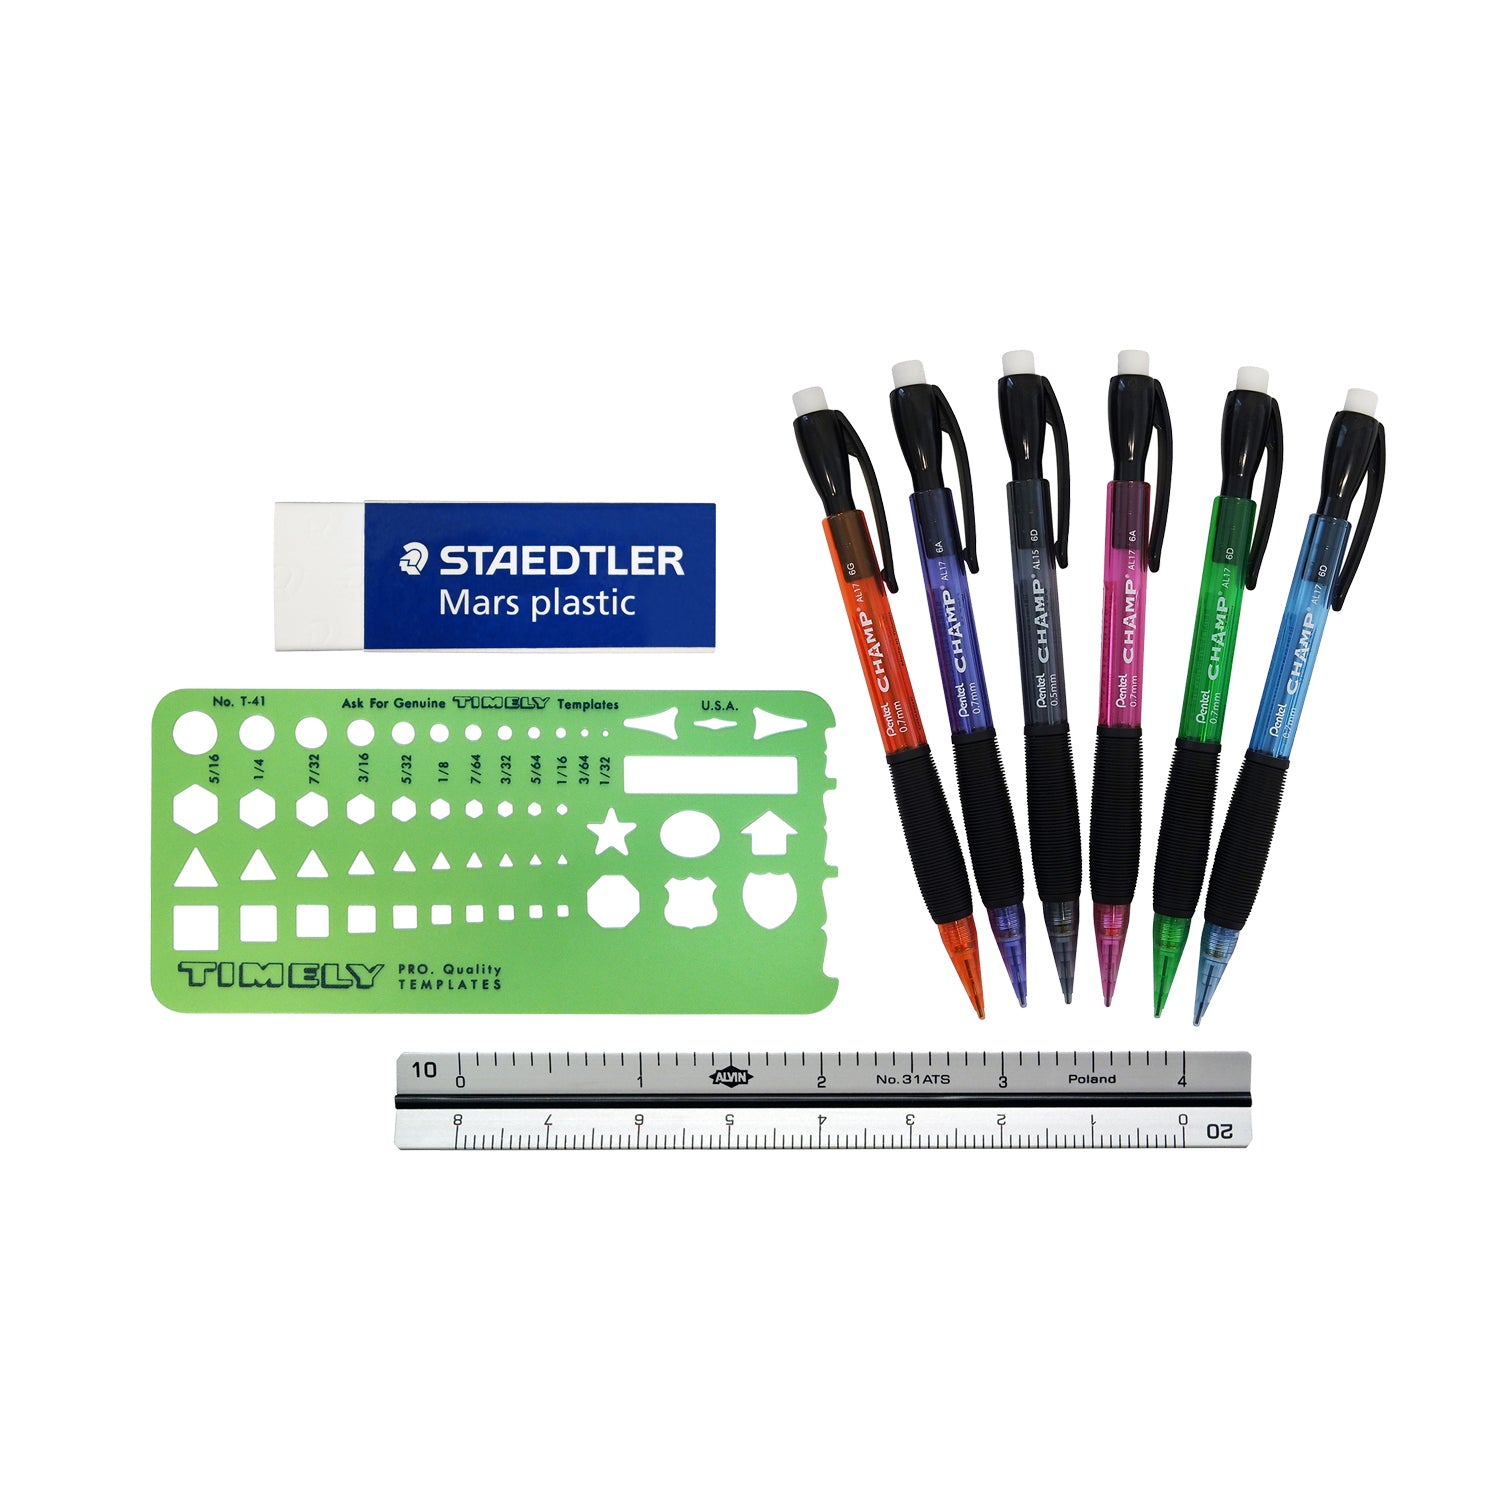 Pencils, ruler, eraser and shape templates